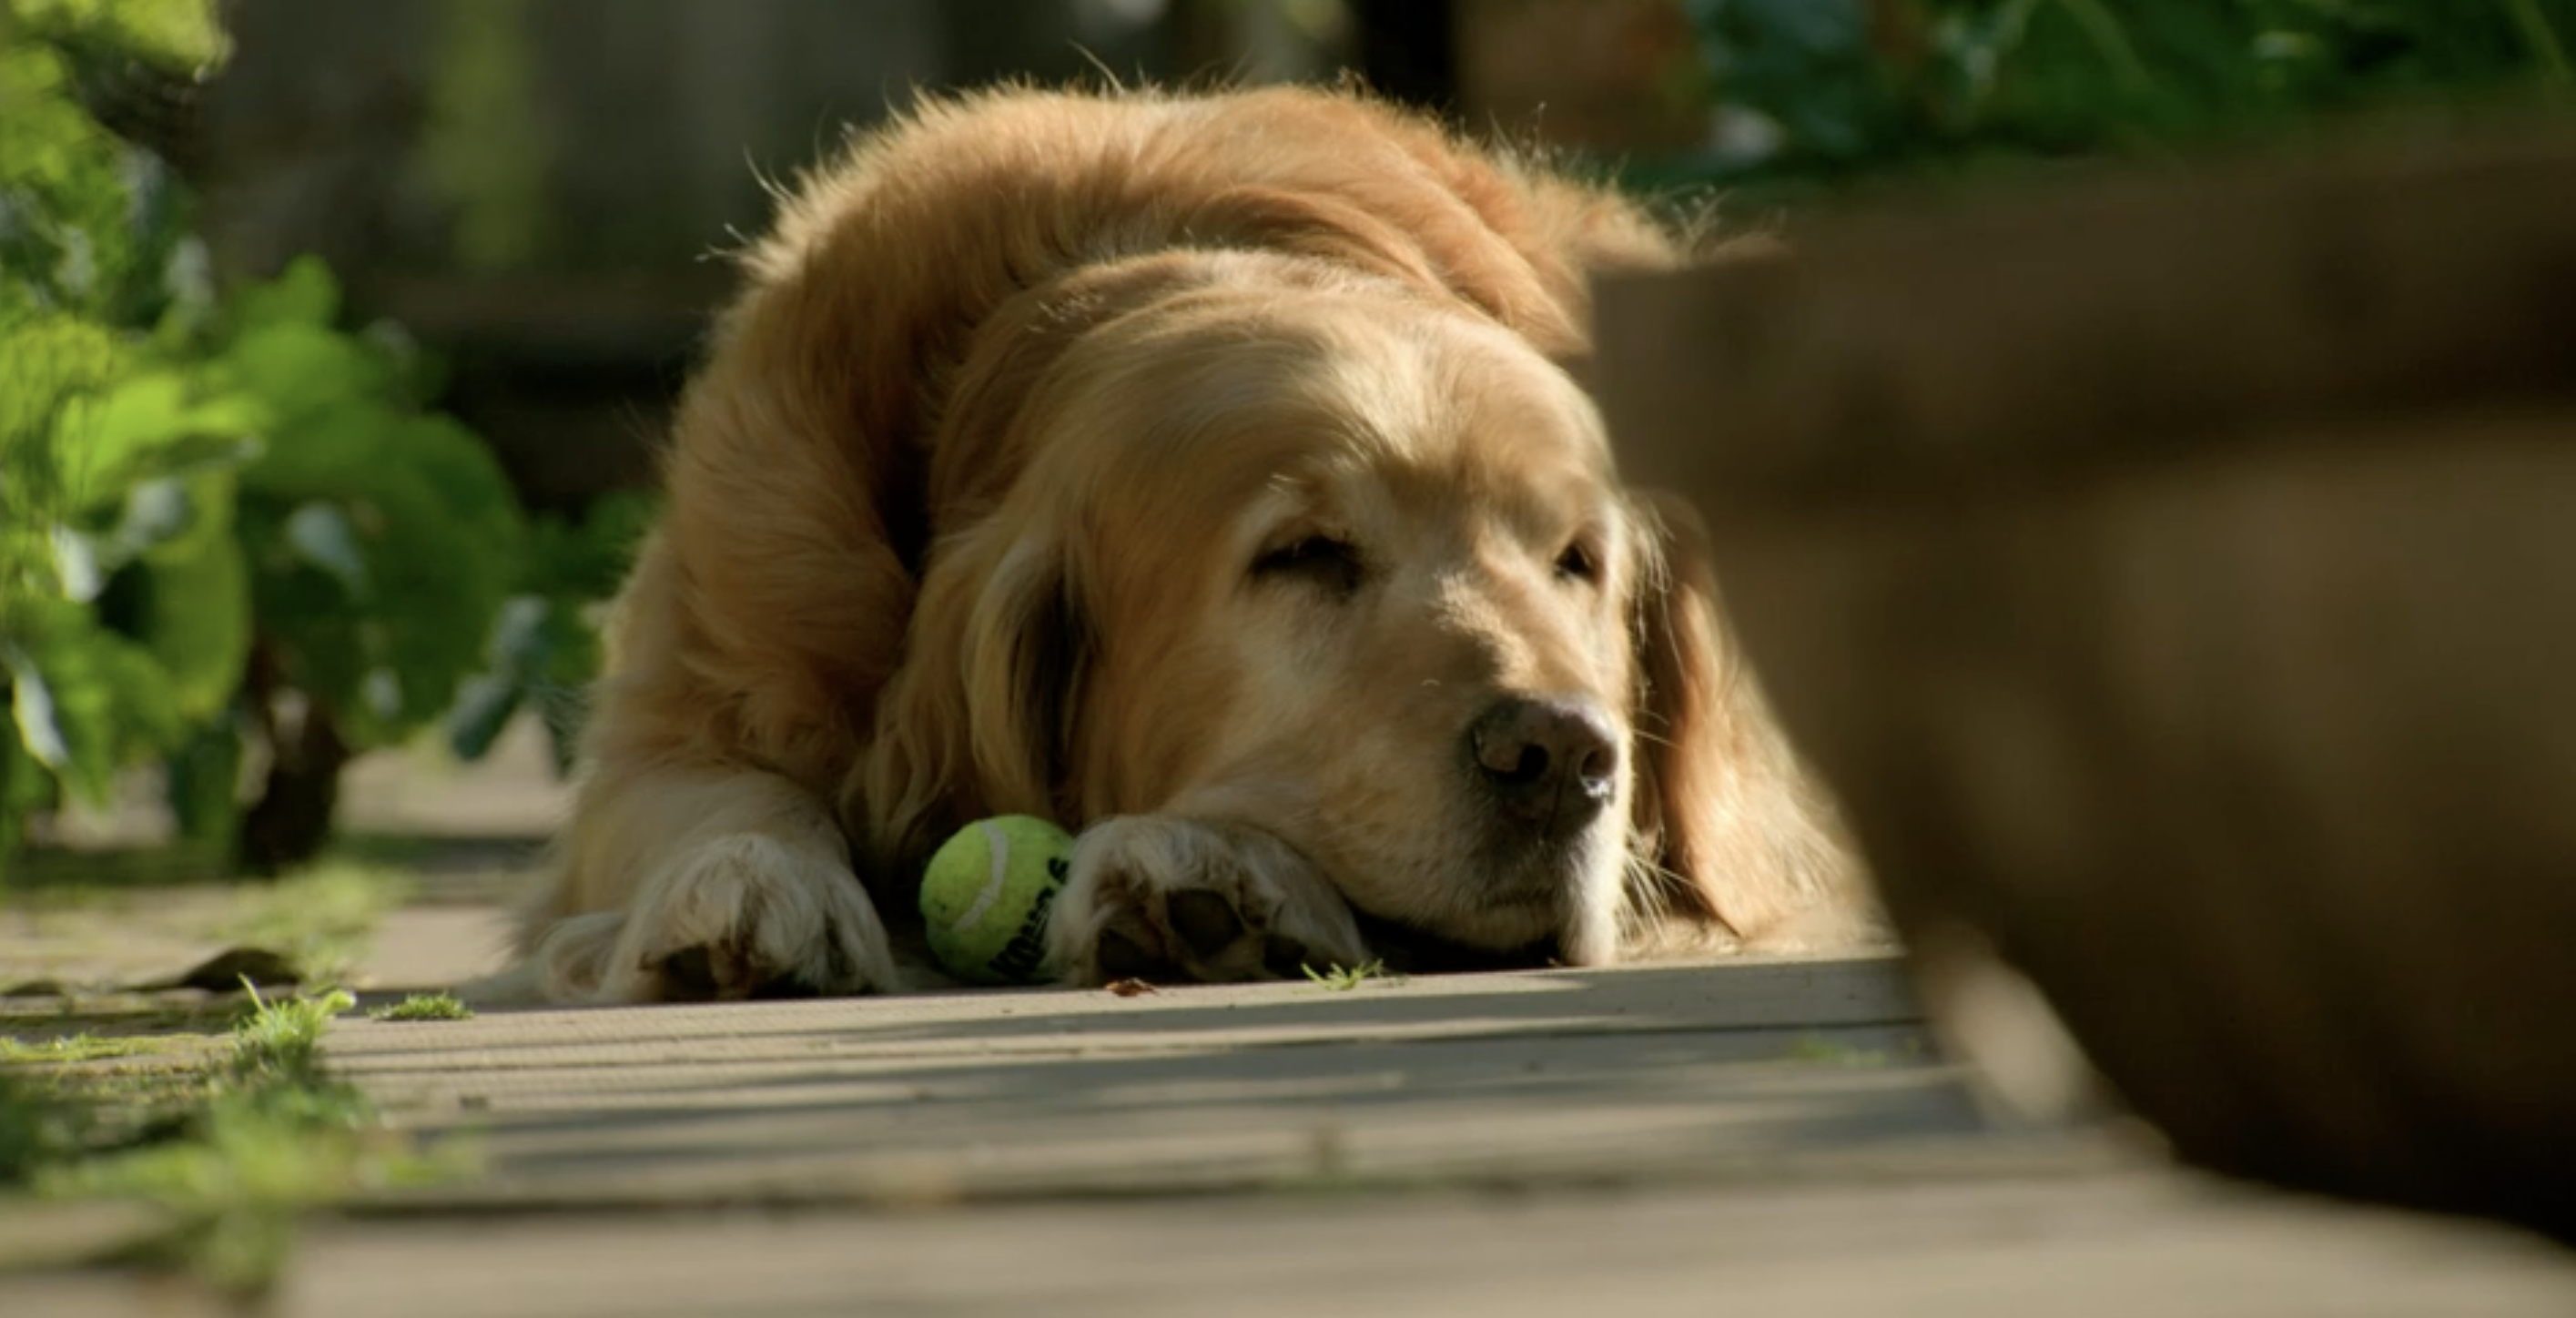 Gardeners' World: Meet Nigel the dog - Monty's pet has his own Twitter!